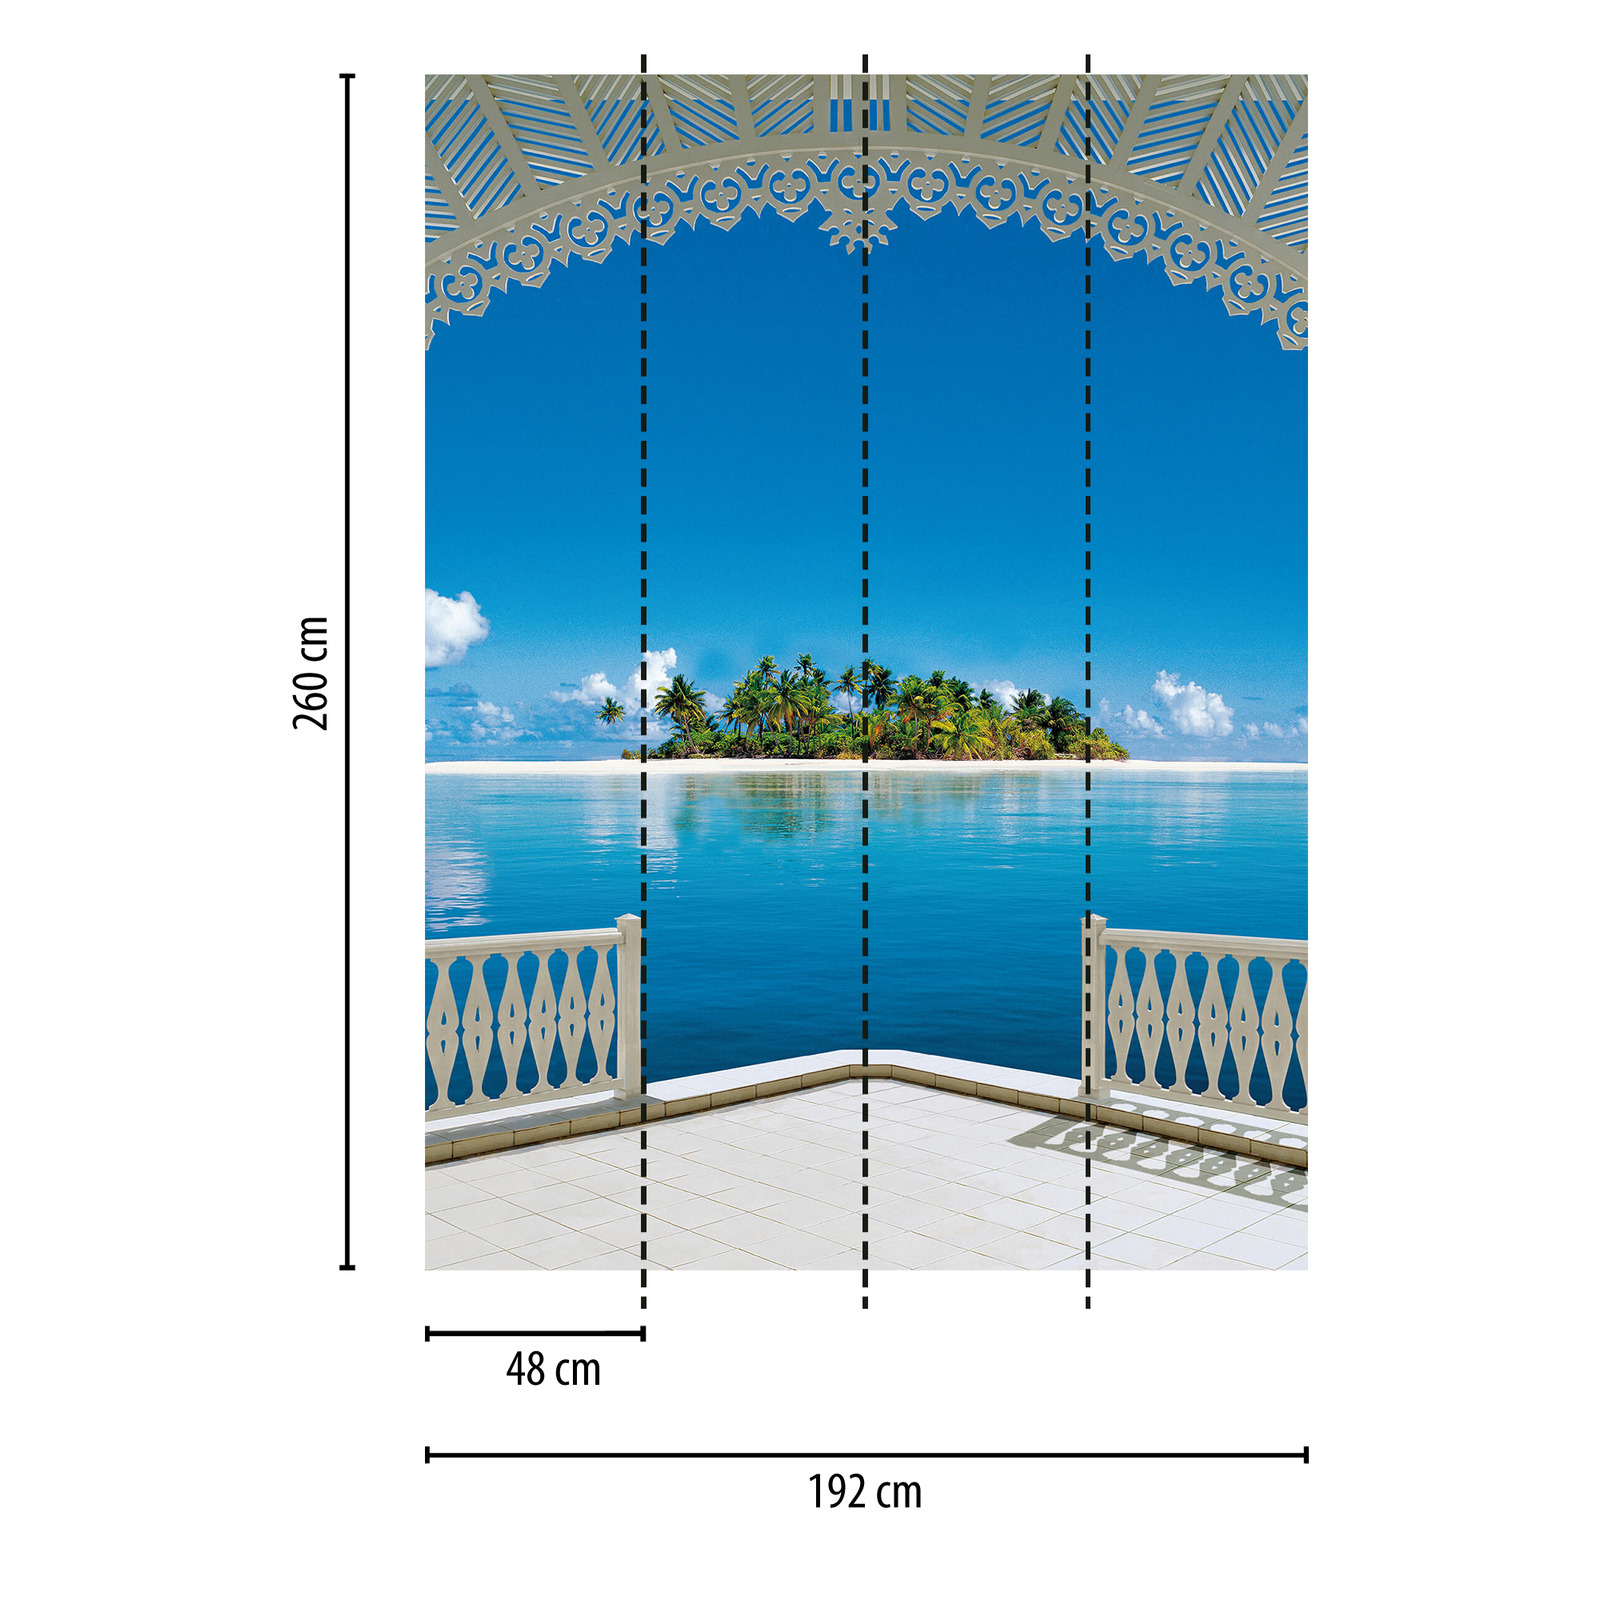             Photo wallpaper tropical island view, portrait format
        